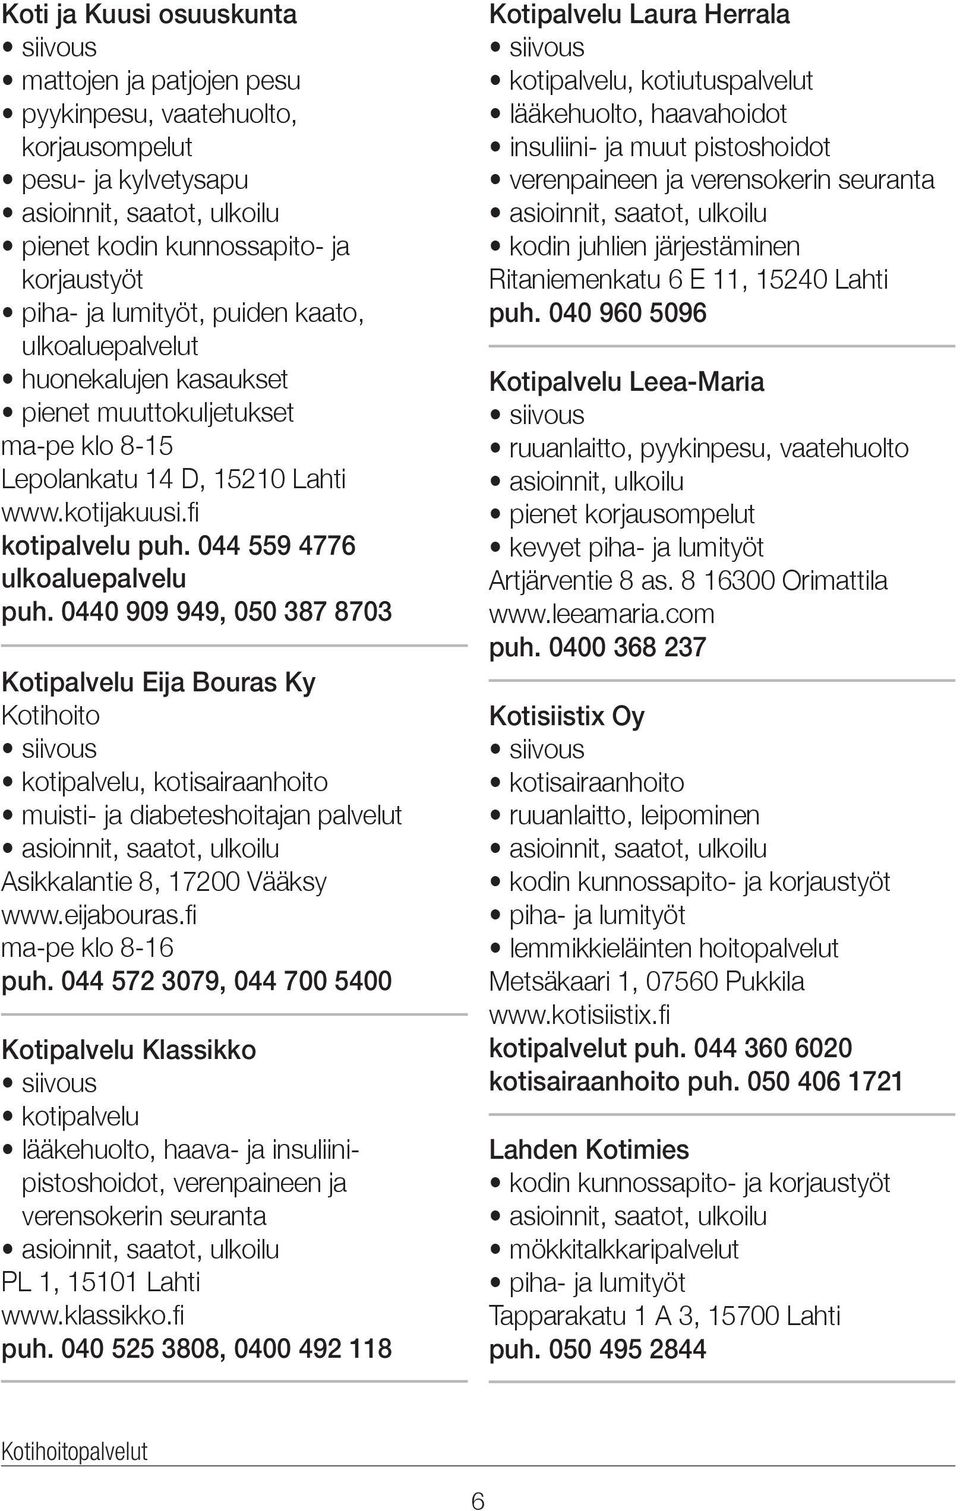 0440 909 949, 050 387 8703 Kotipalvelu Eija Bouras Ky Kotihoito kotipalvelu, kotisairaanhoito muisti- ja diabeteshoitajan palvelut Asikkalantie 8, 17200 Vääksy www.eijabouras.fi ma-pe klo 8-16 puh.